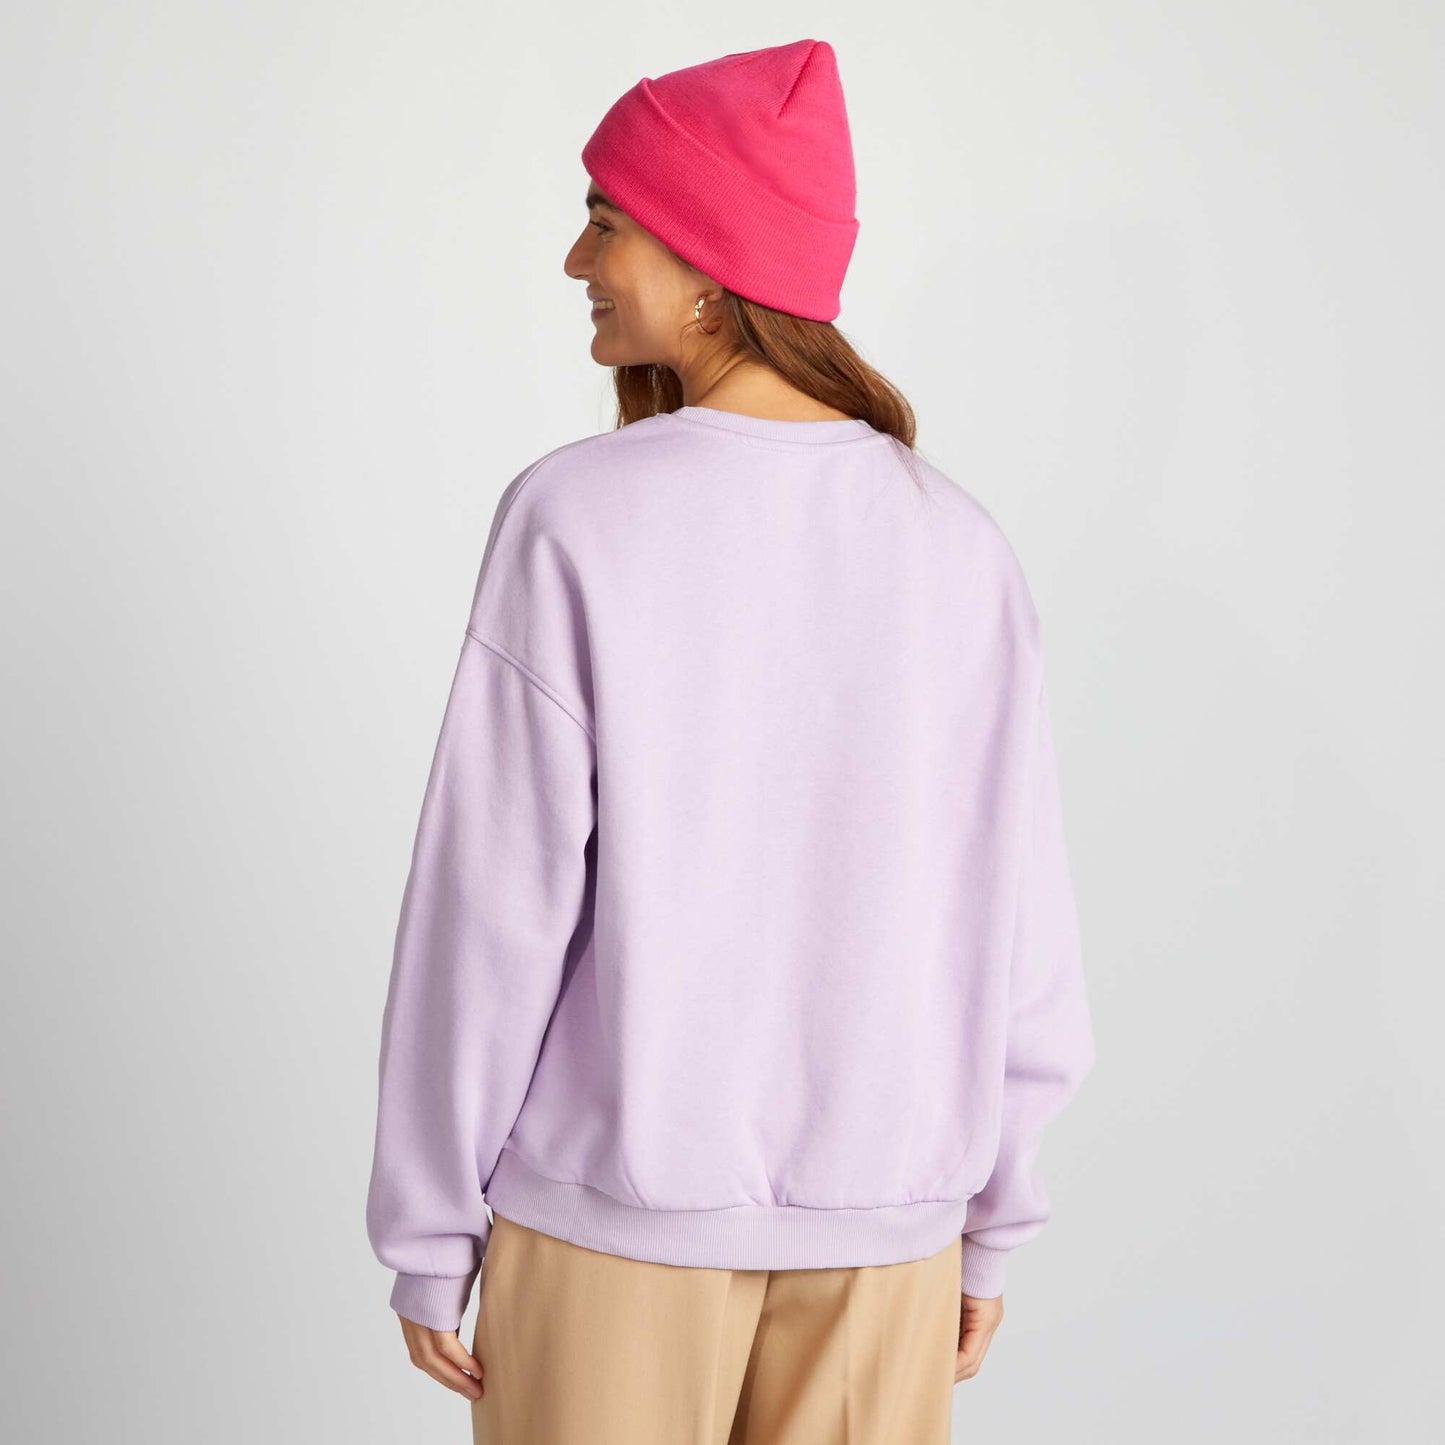 Printed sweatshirt fabric sweater PURPLE